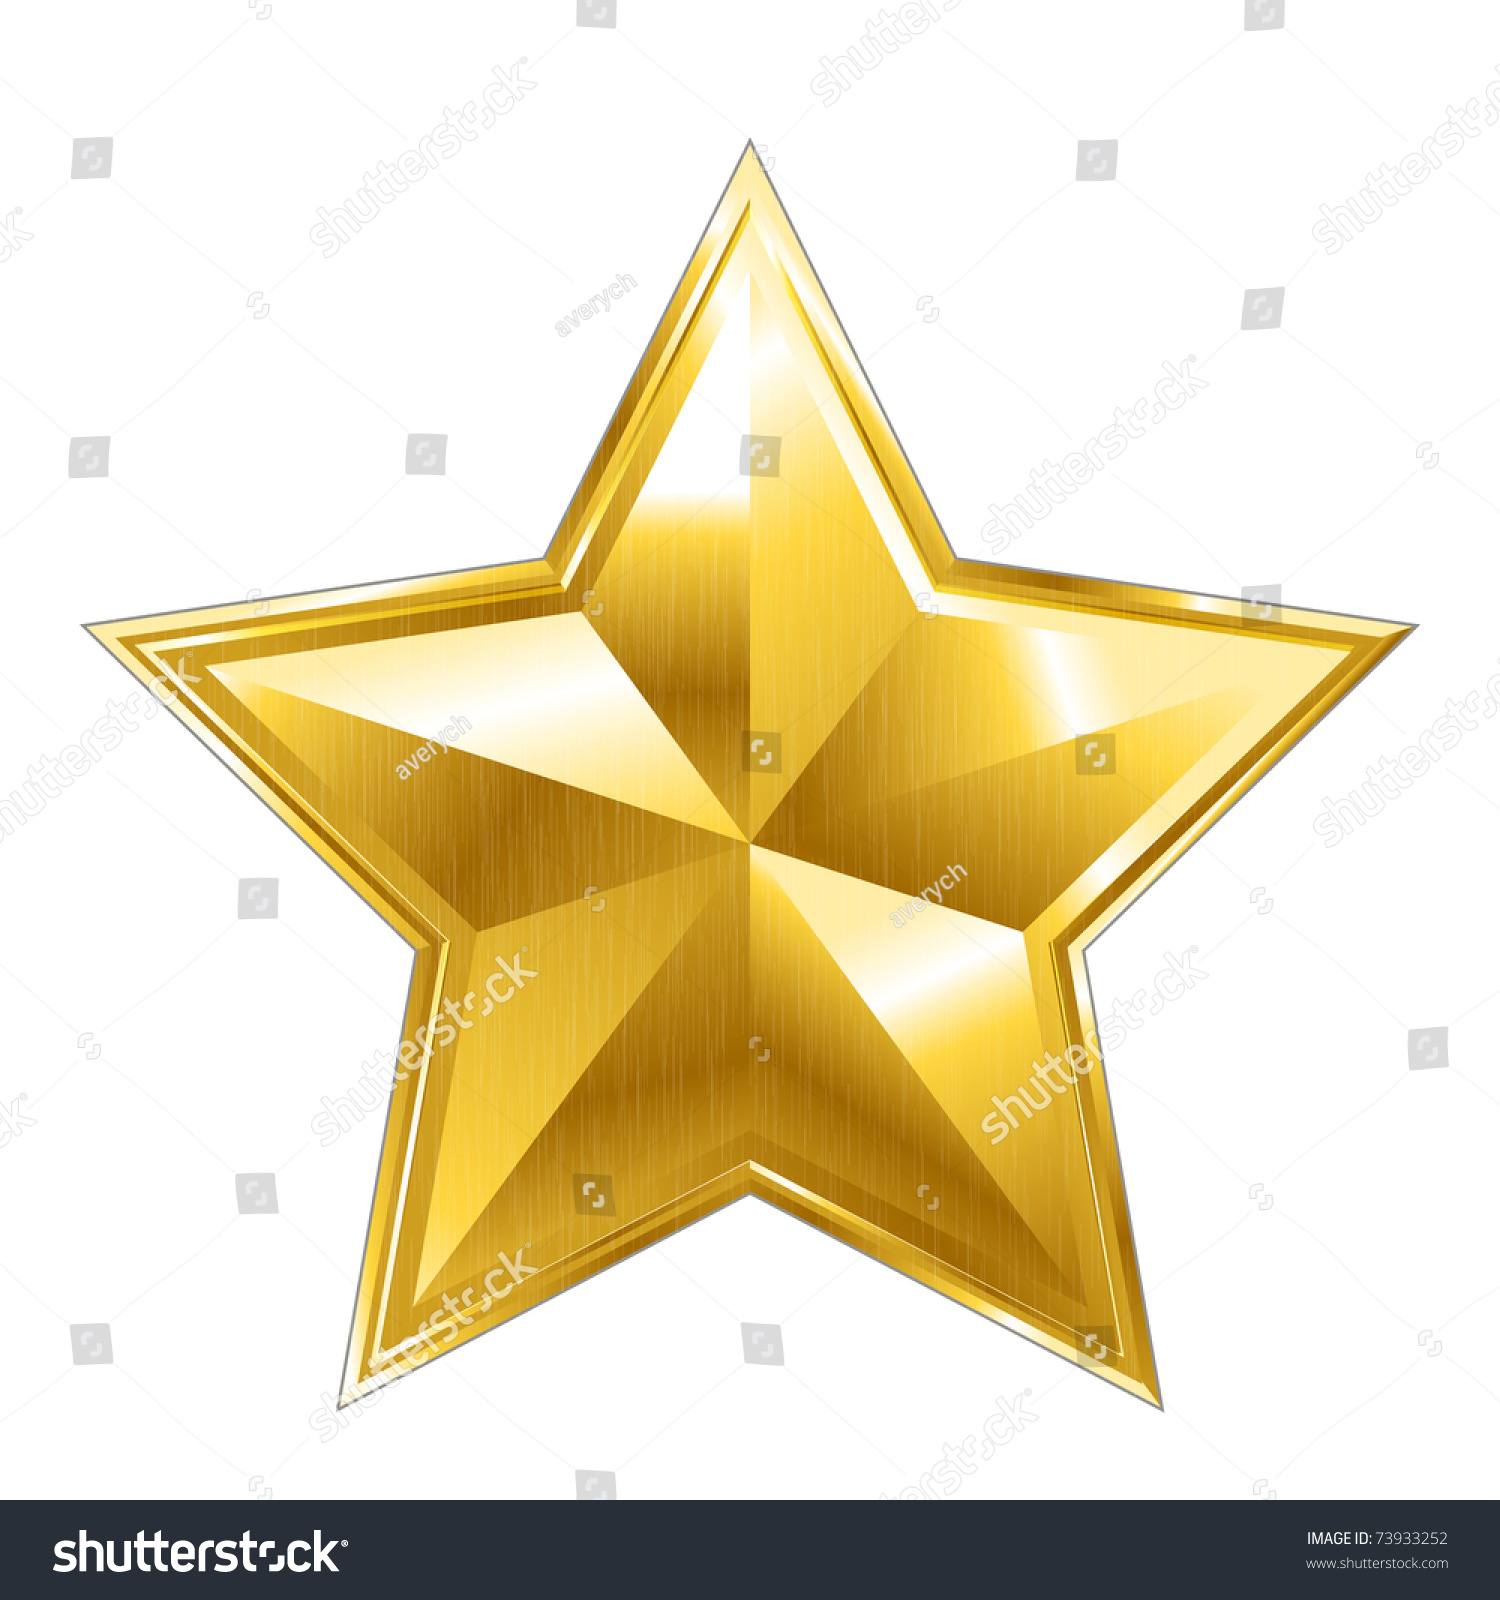 Vector Star Icon On White Background - 73933252 : Shutterstock